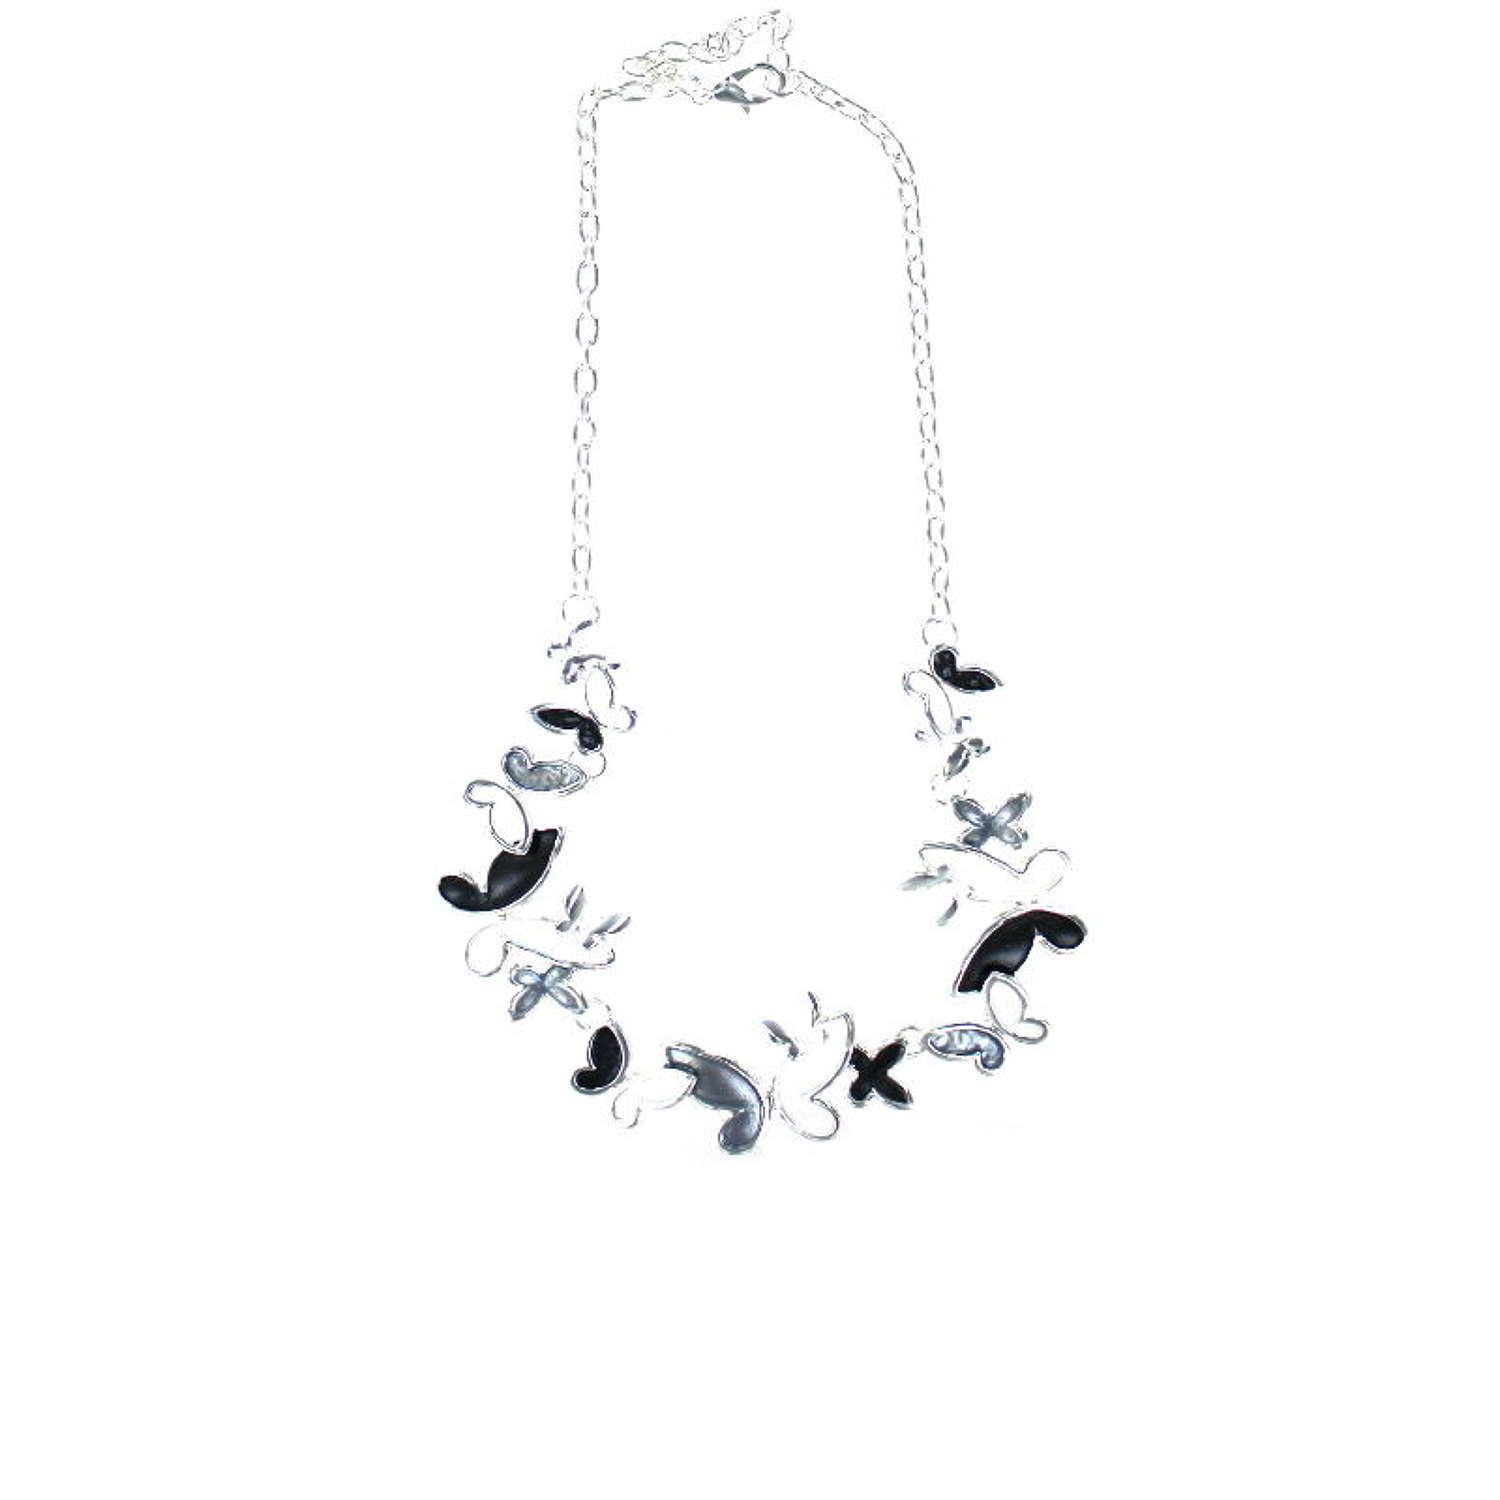 Butterfly enamel necklace on silver tone chain.